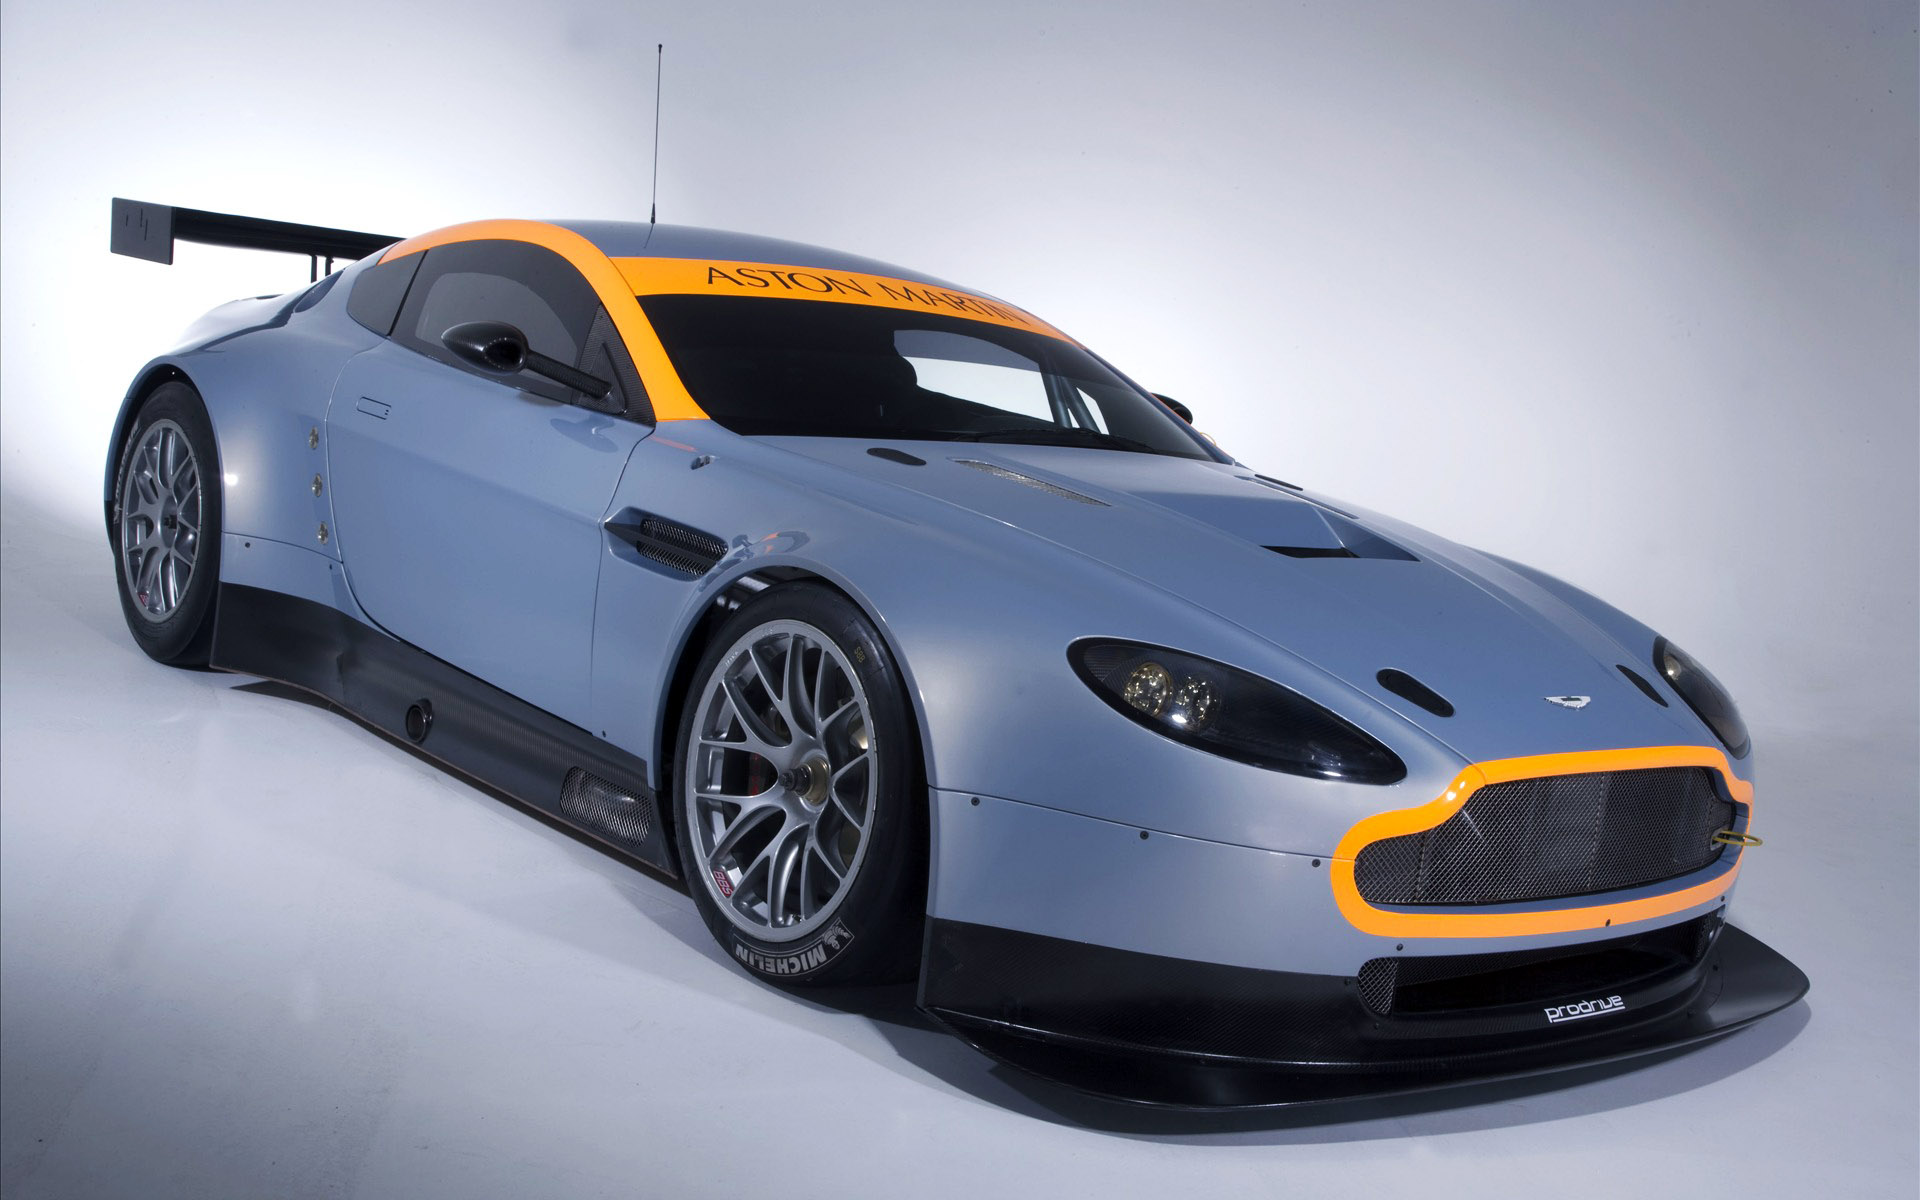 Download full size Aston Martin wallpaper / Cars / 1920x1200